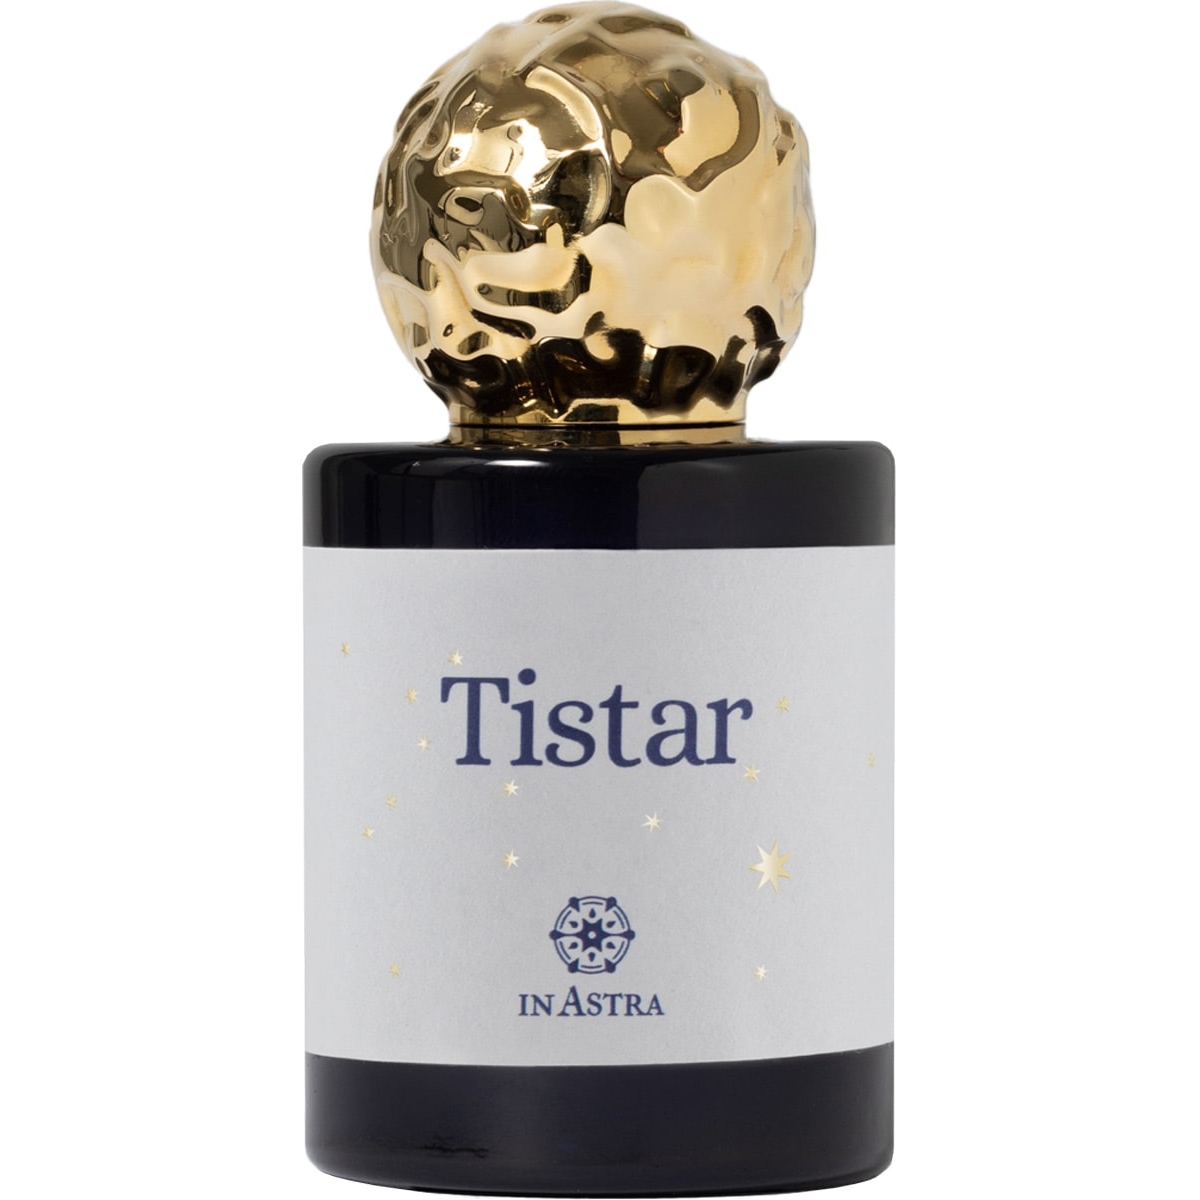 Tistar In Astra Perfumes, Unisex Perfumes, Arada Perfumes